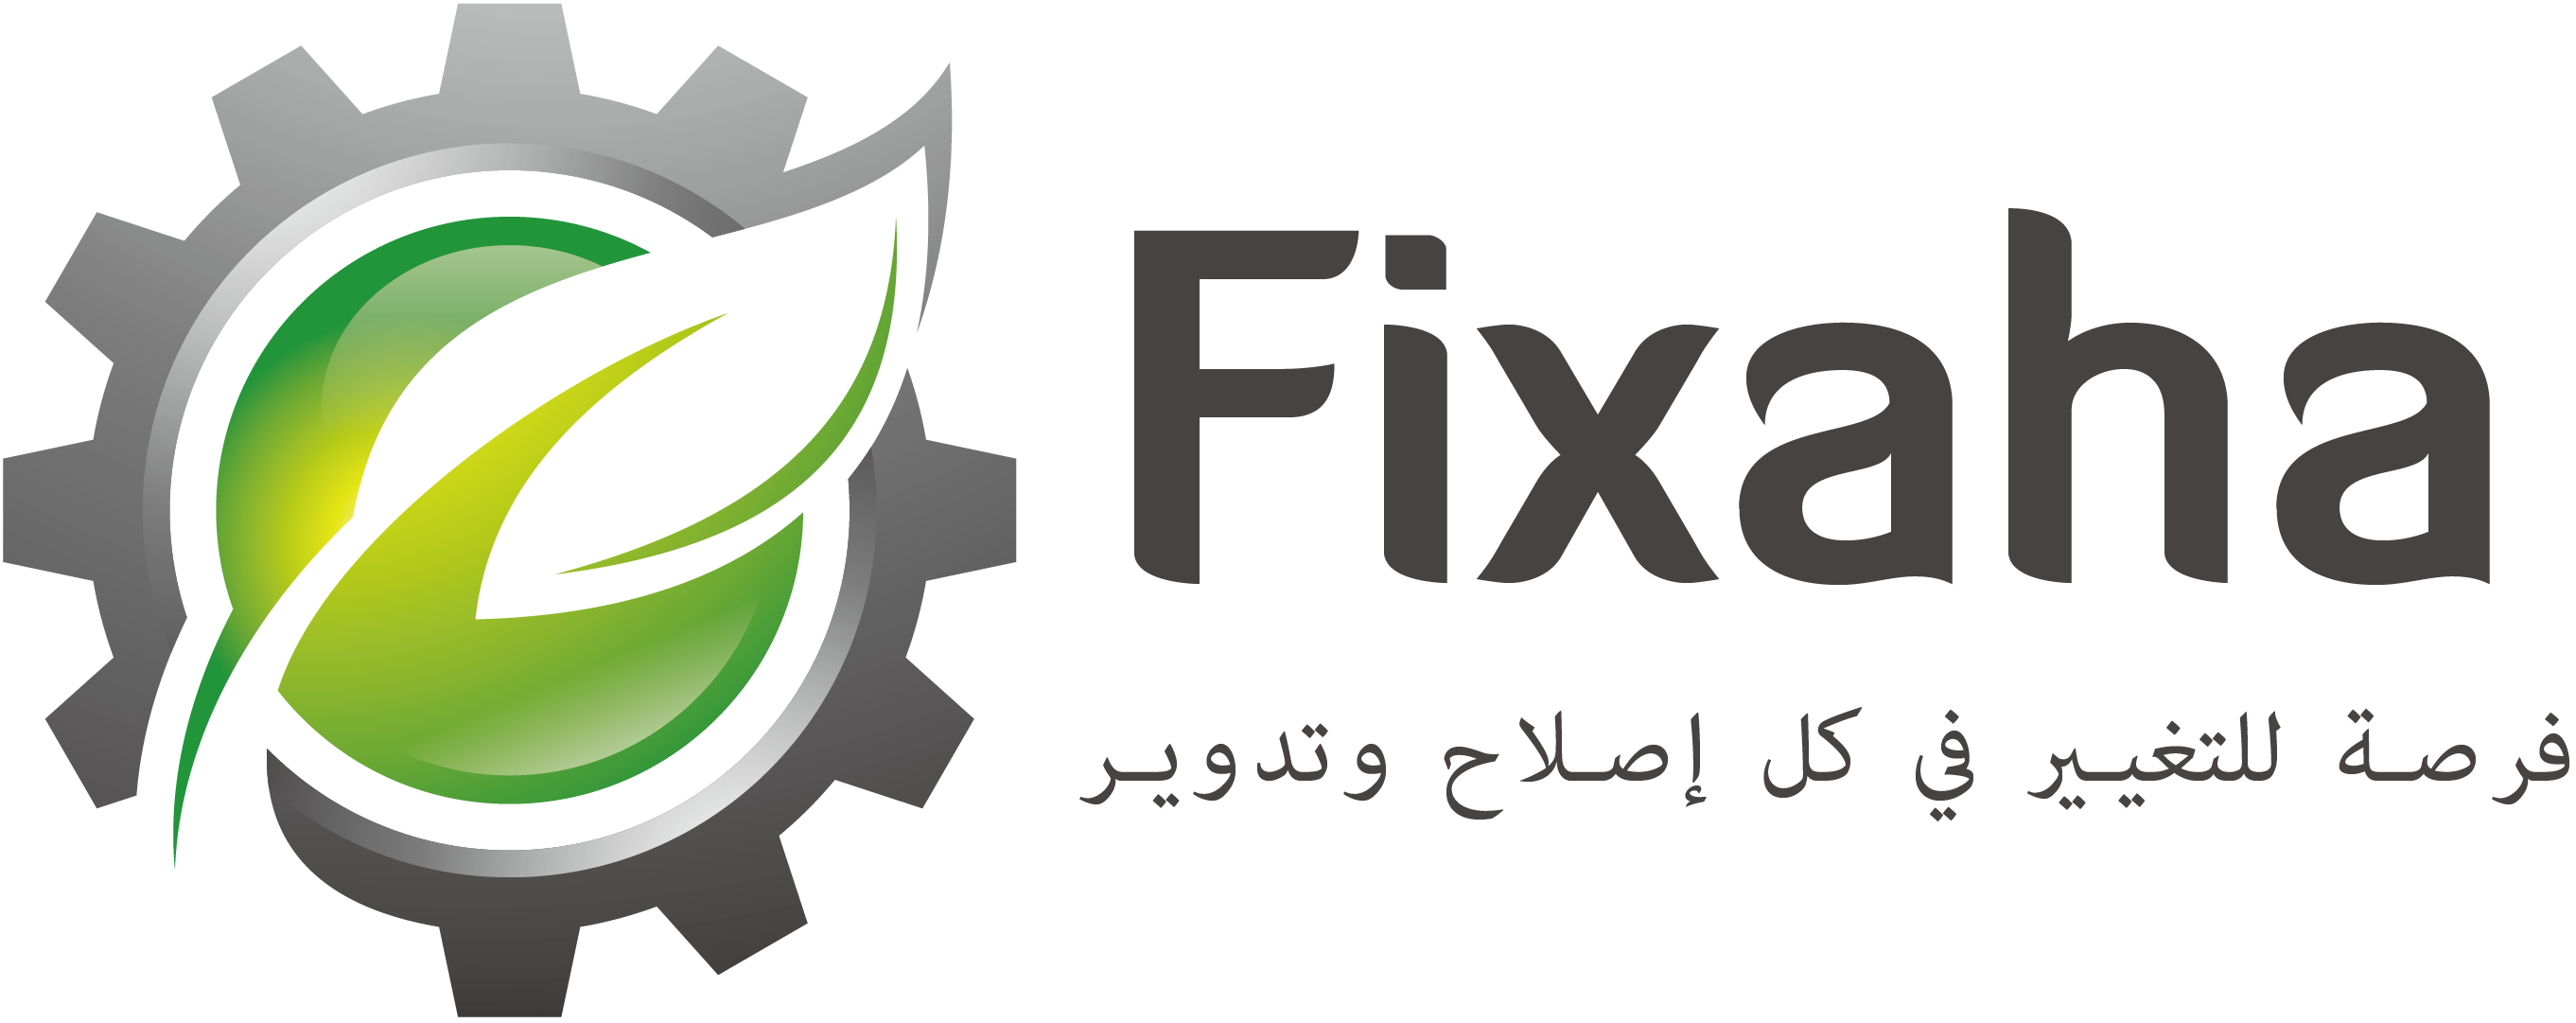 Fixaha: Arabic Eco, DIY, And Recycling Platform